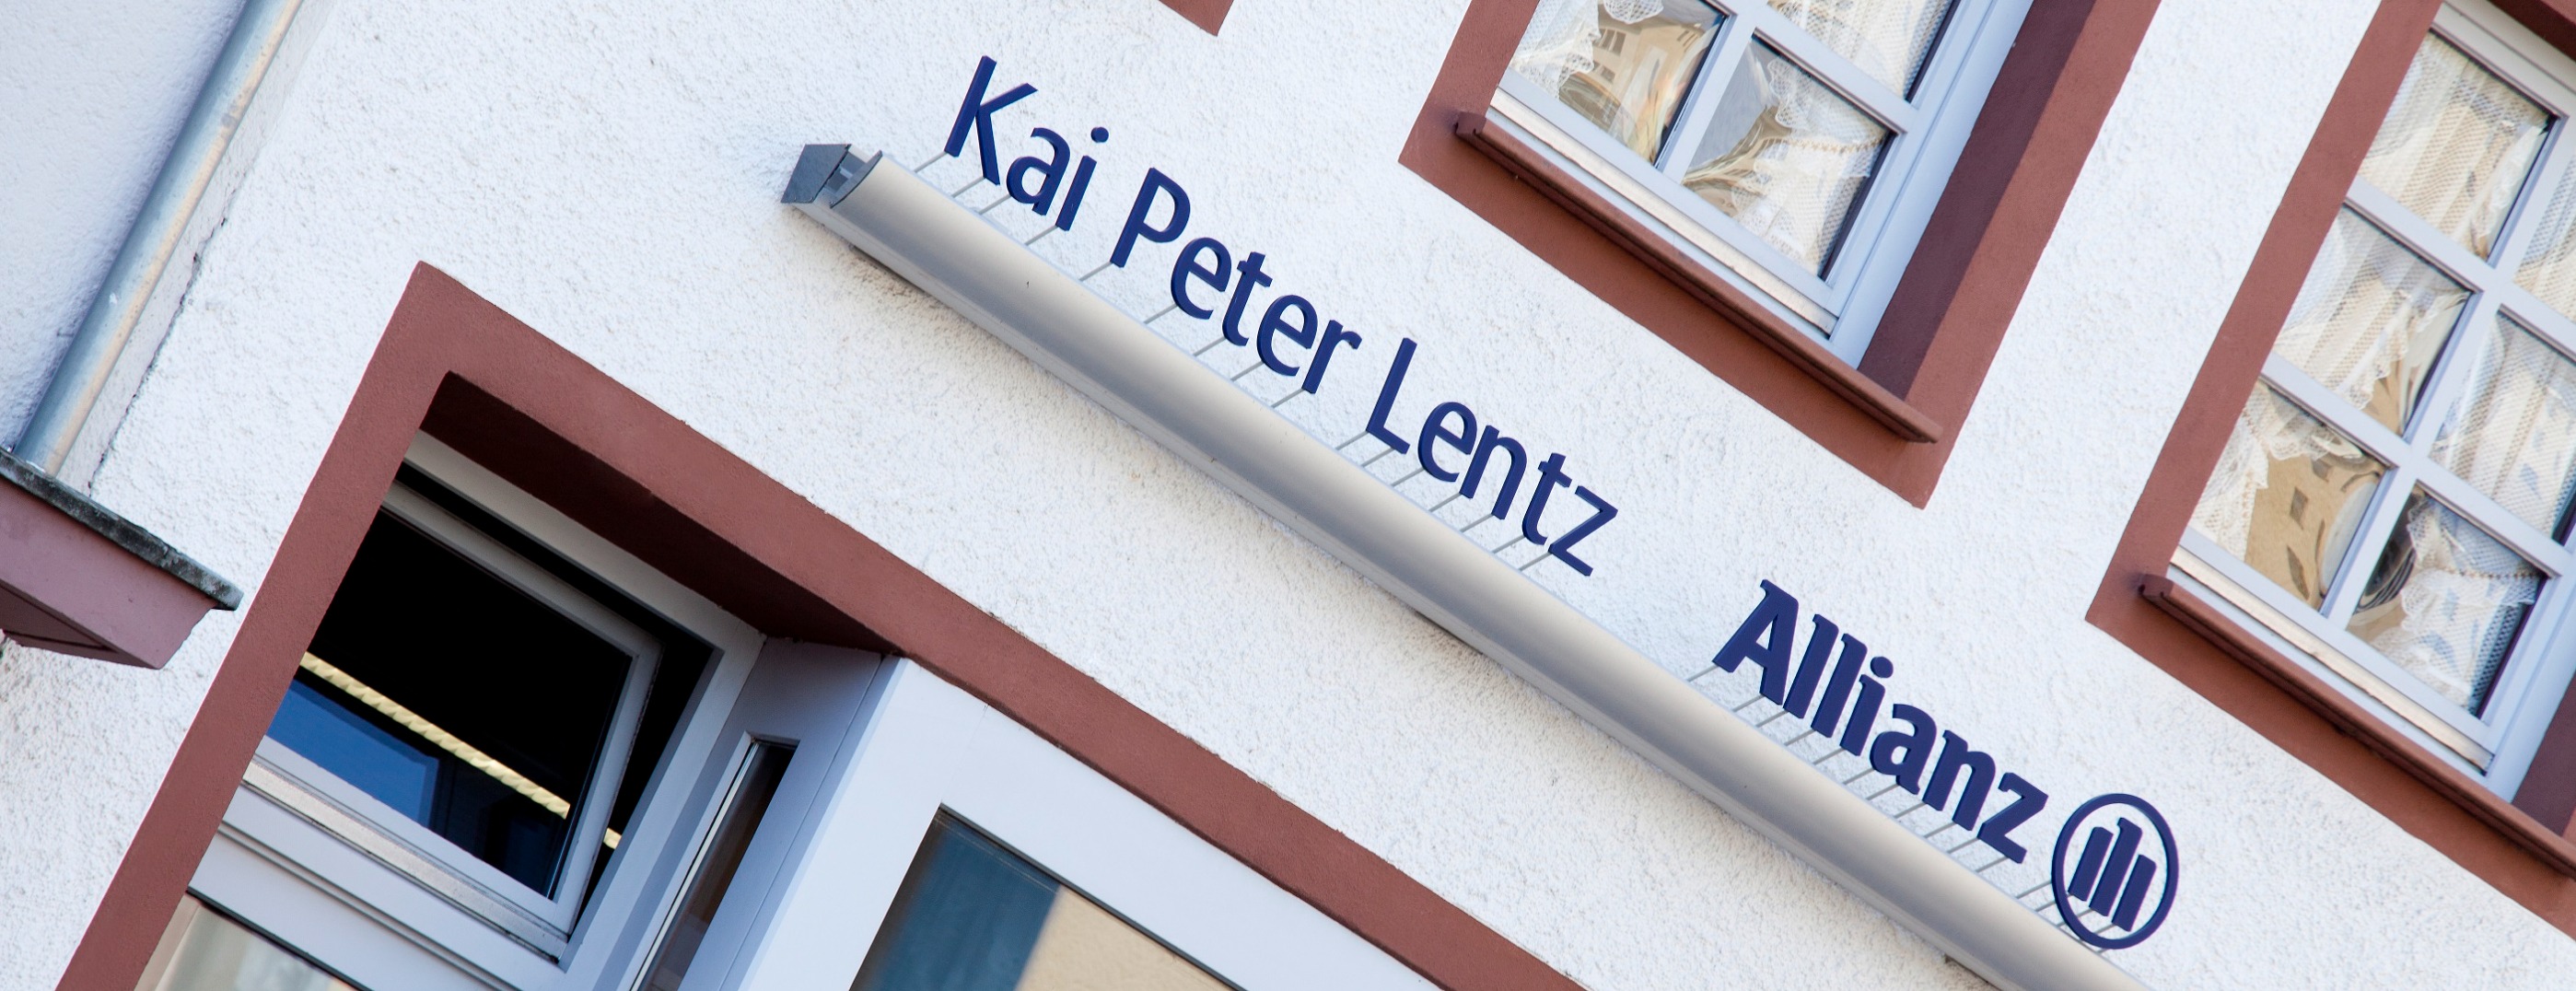 Allianz Versicherung Kai Peter Lentz Prüm - Kai Peter Lentz - Allianz Agentur Prüm 